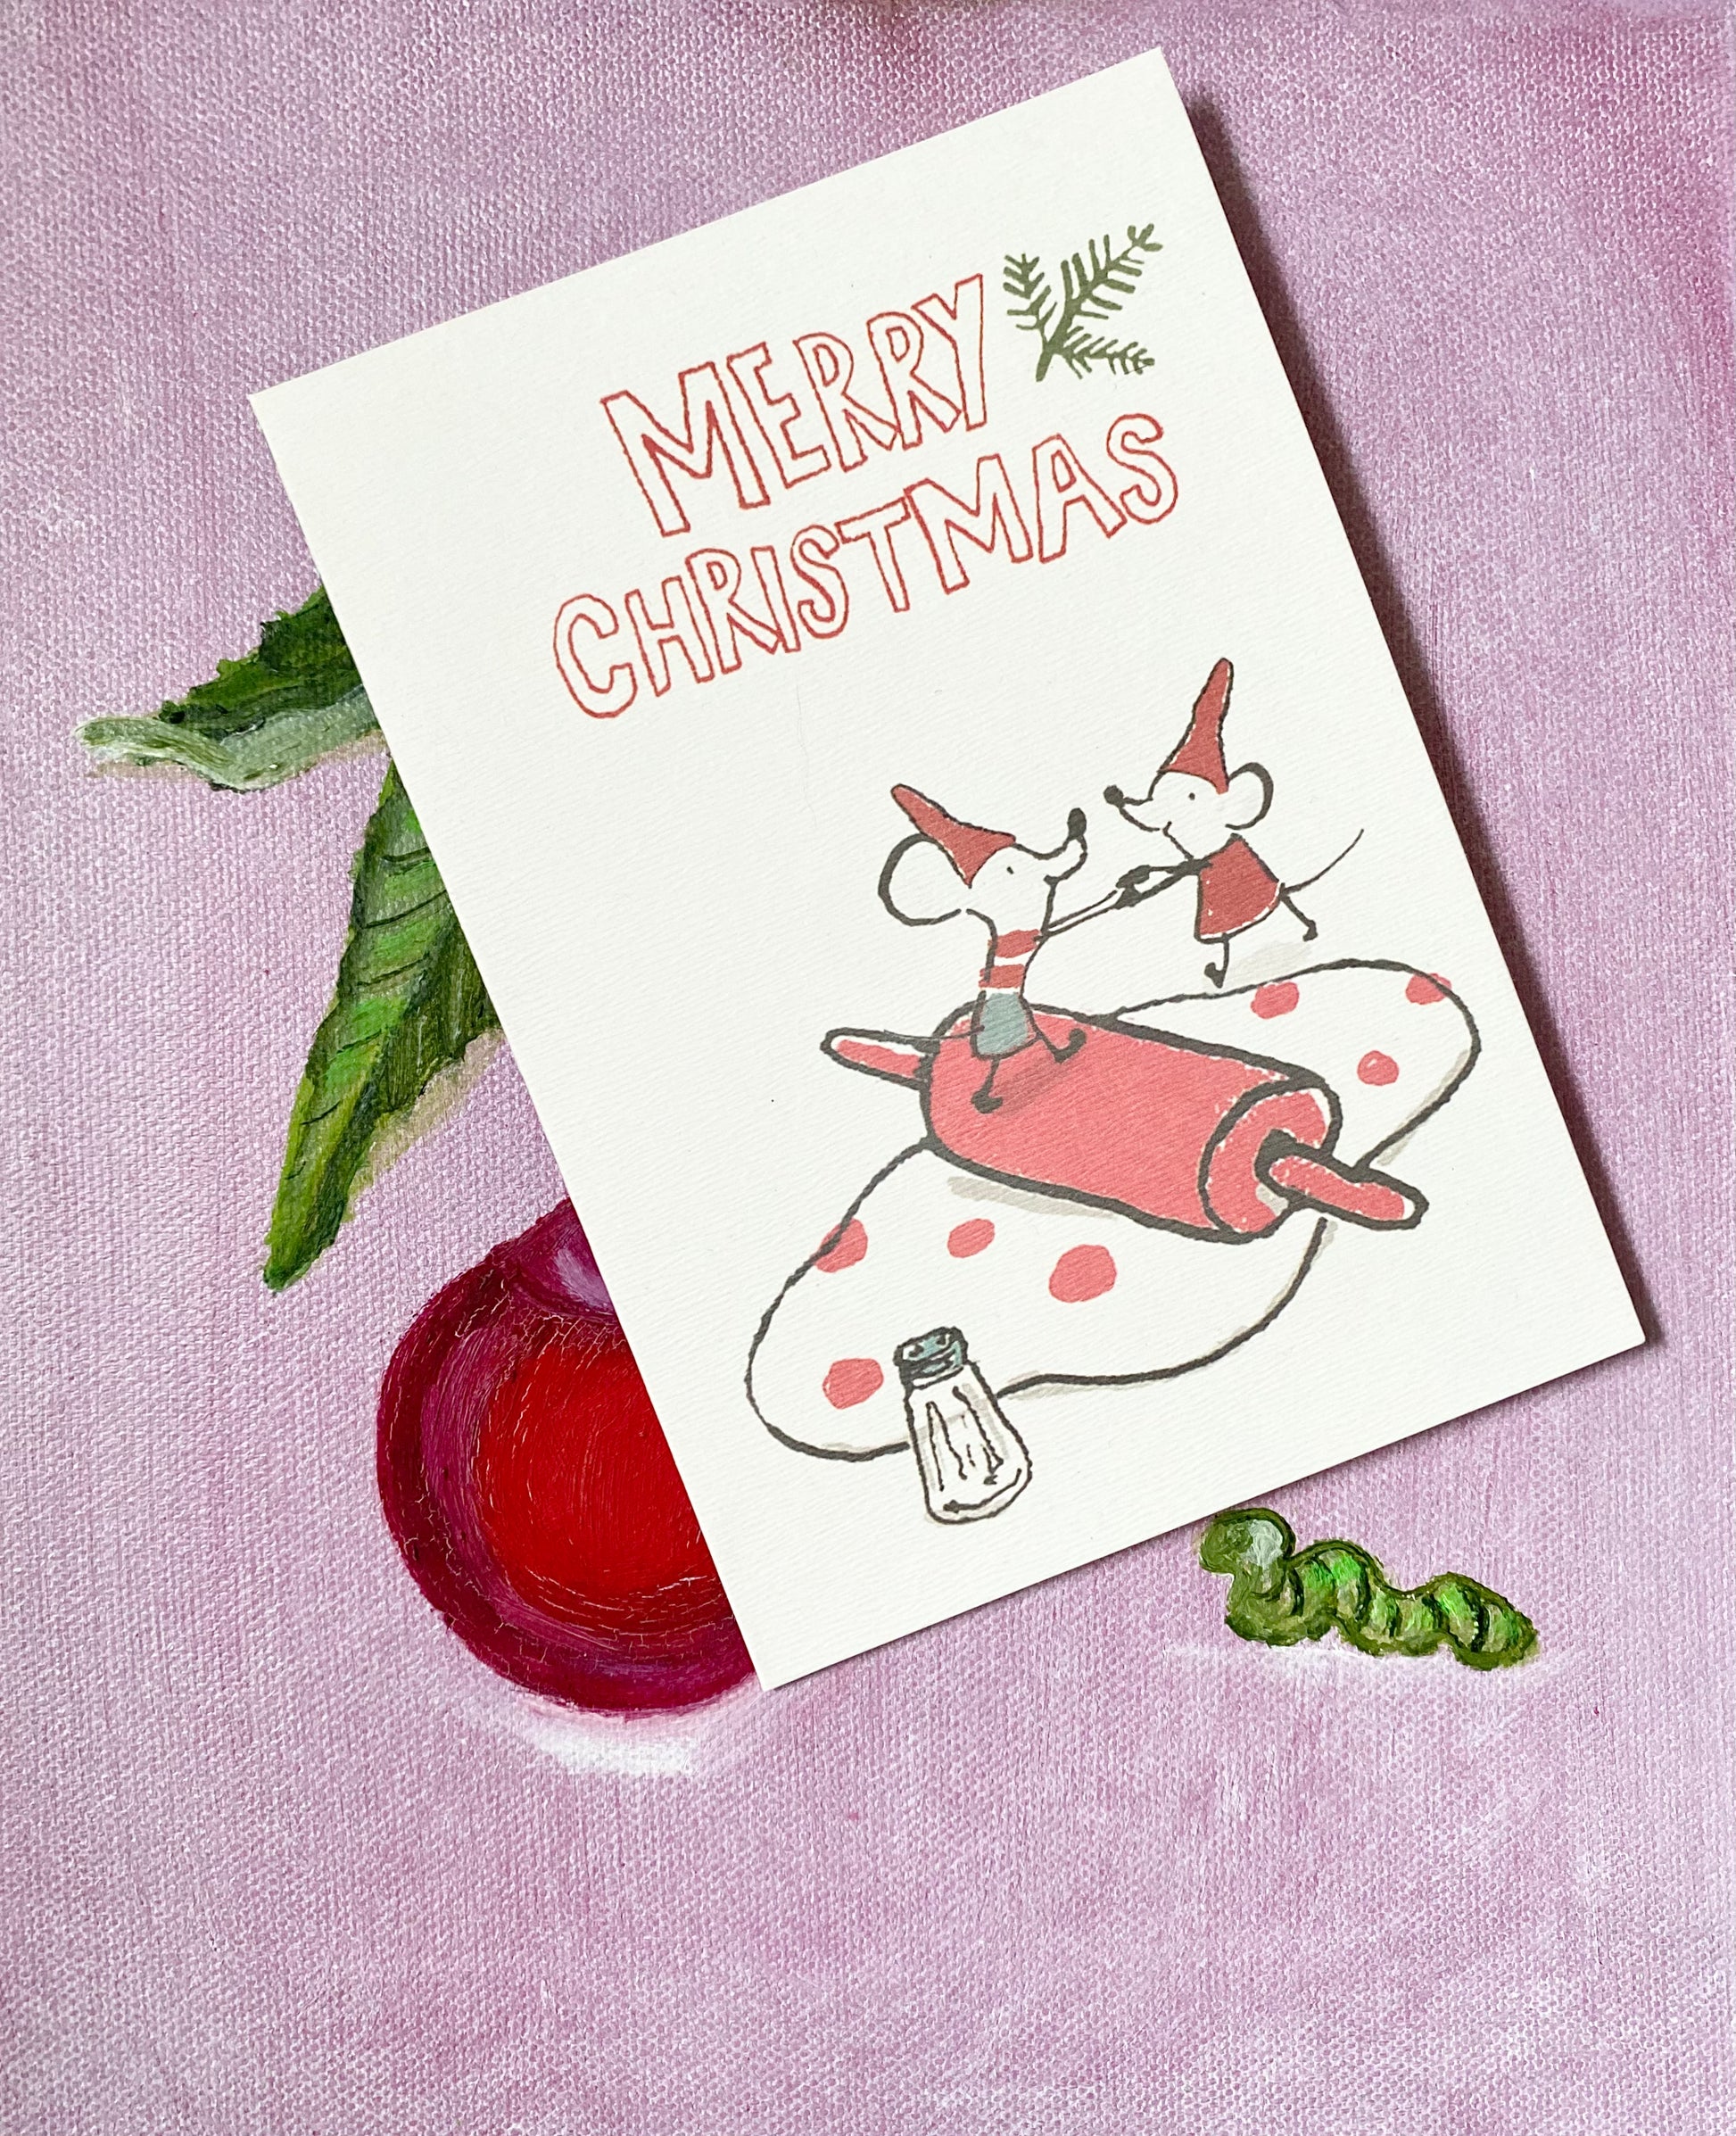 Double Christmas Card “Dancing Mice” - 2012